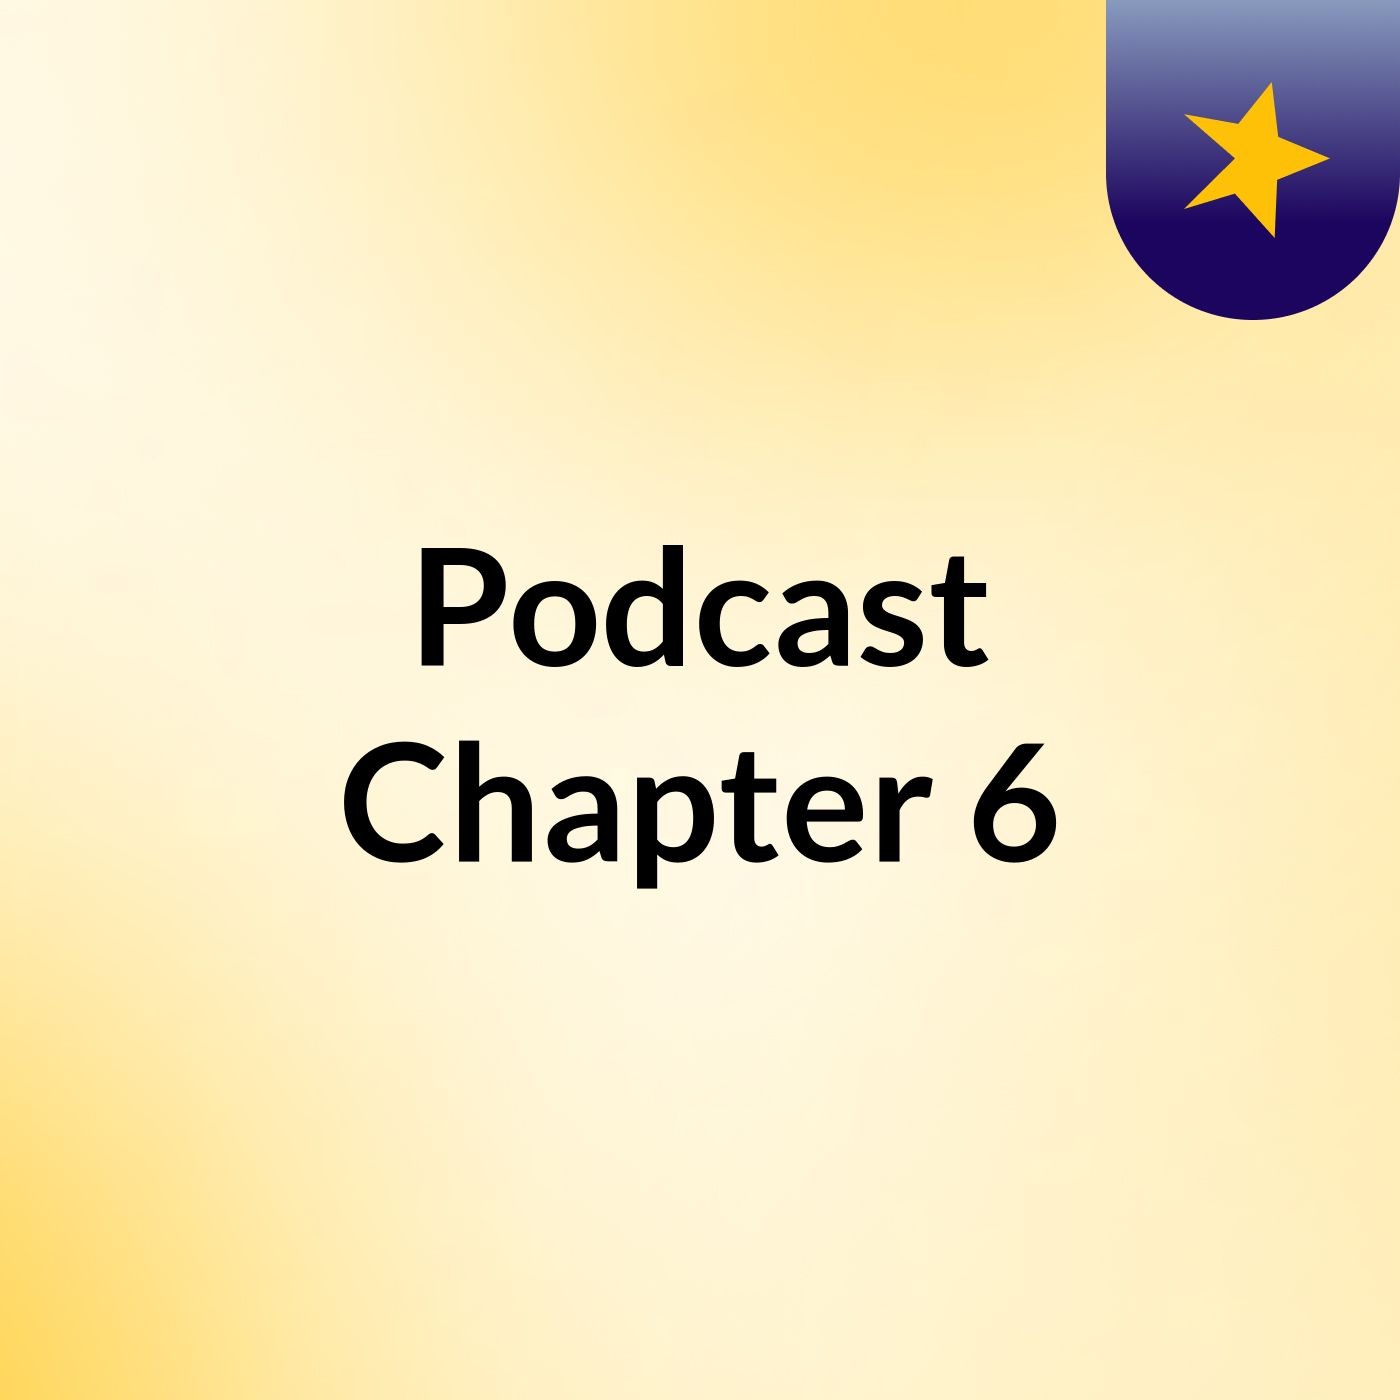 Episodio 2 - Podcast Chapter 6